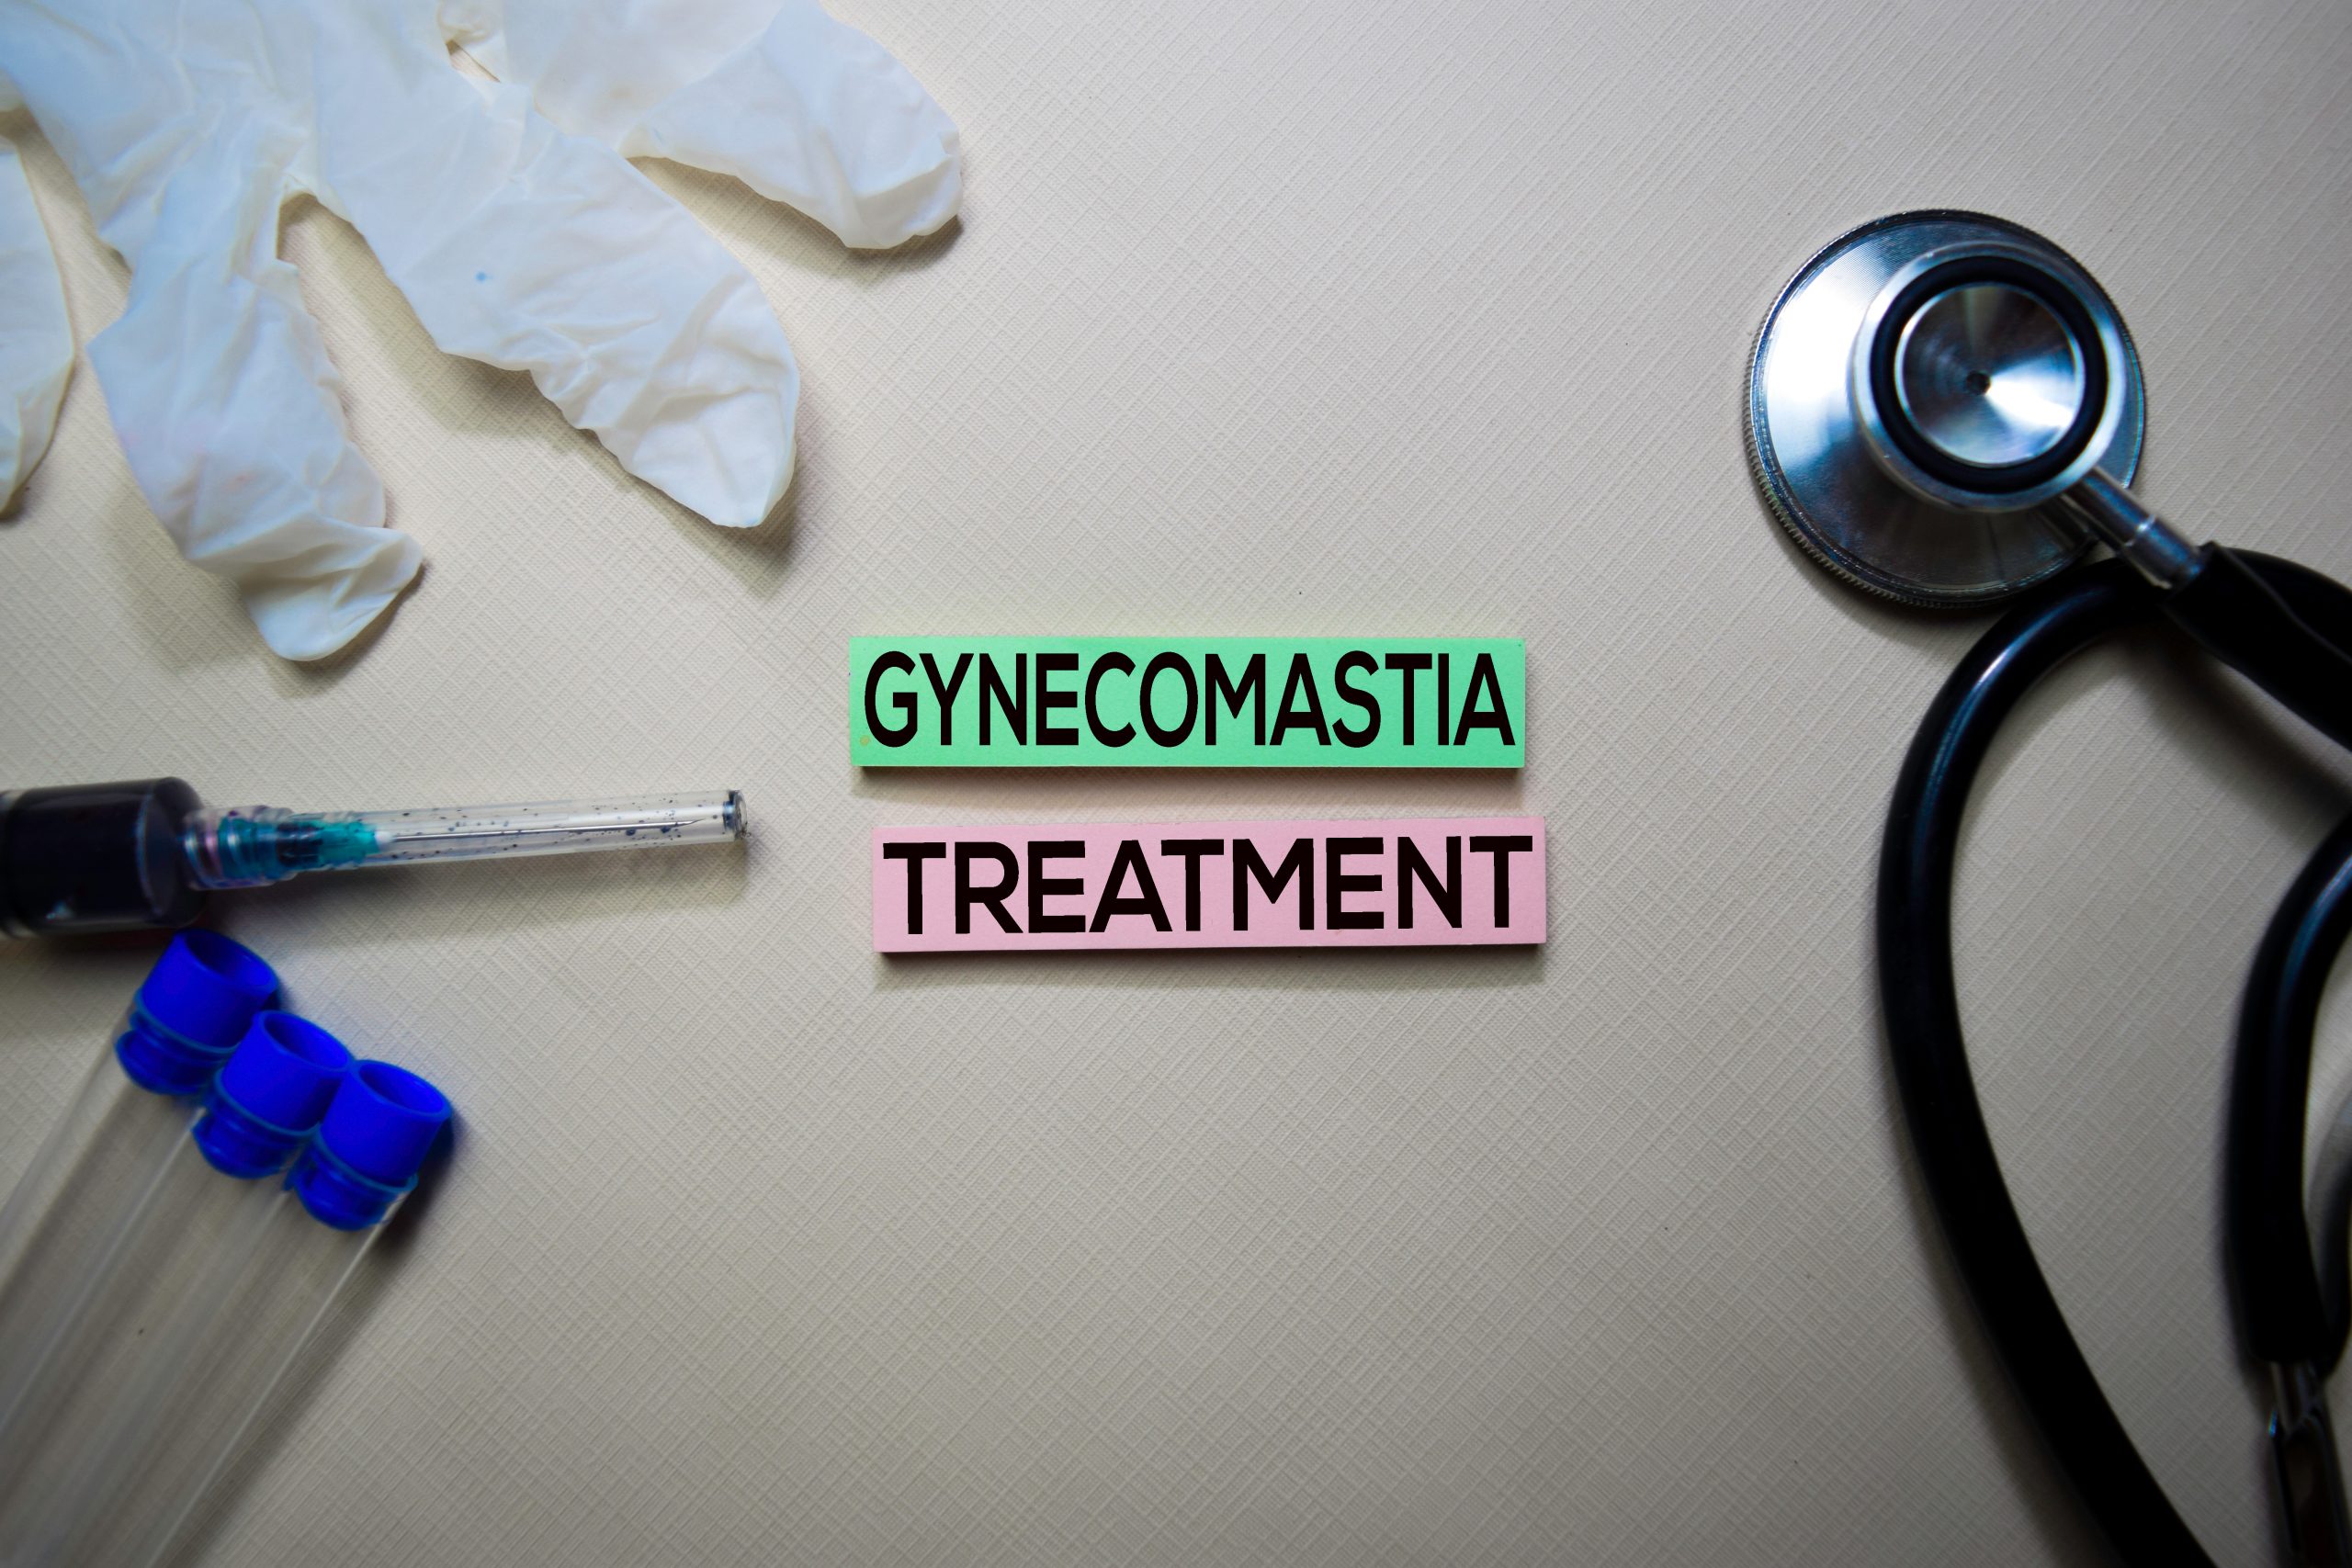 Gynecomastia treatment Dr. Sam Jejurikar